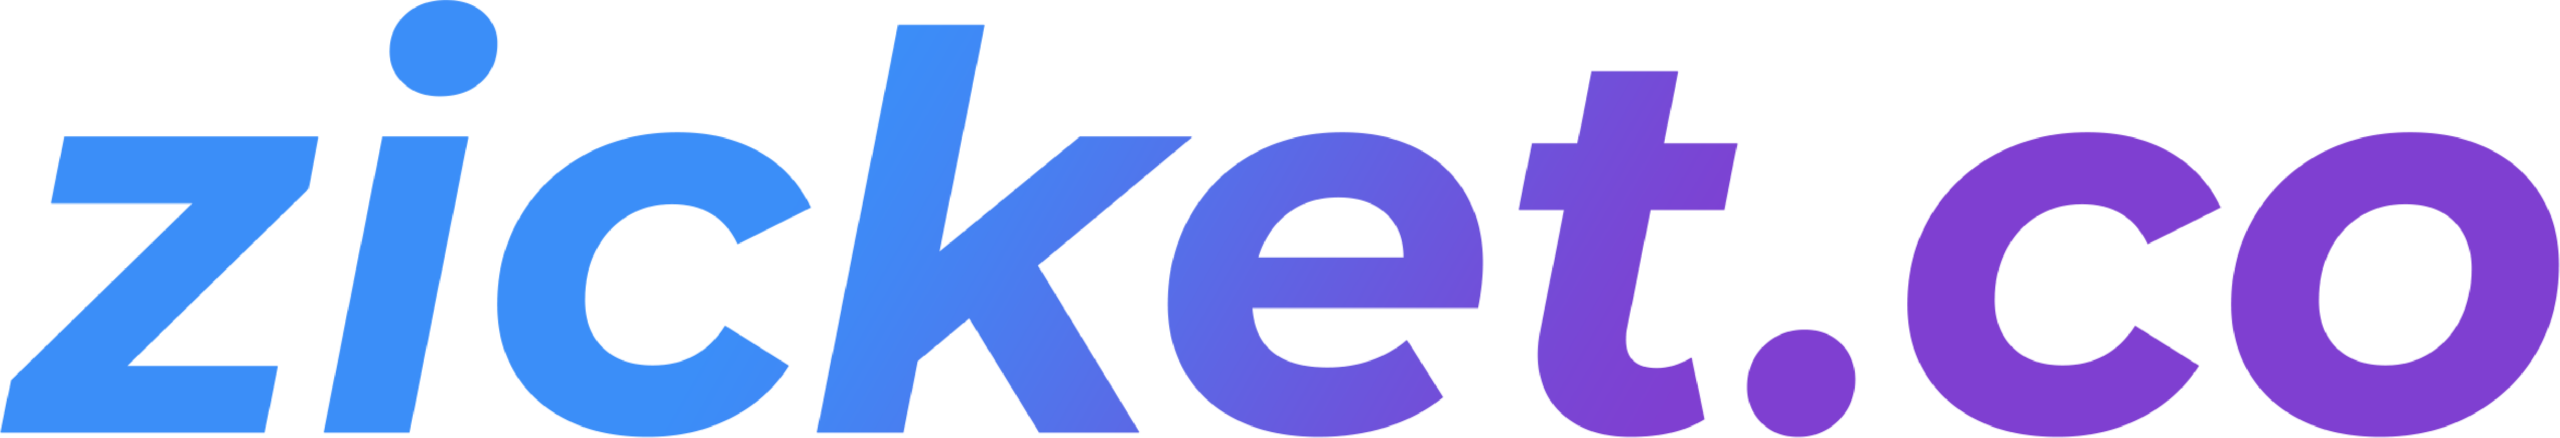 Zicket Logo